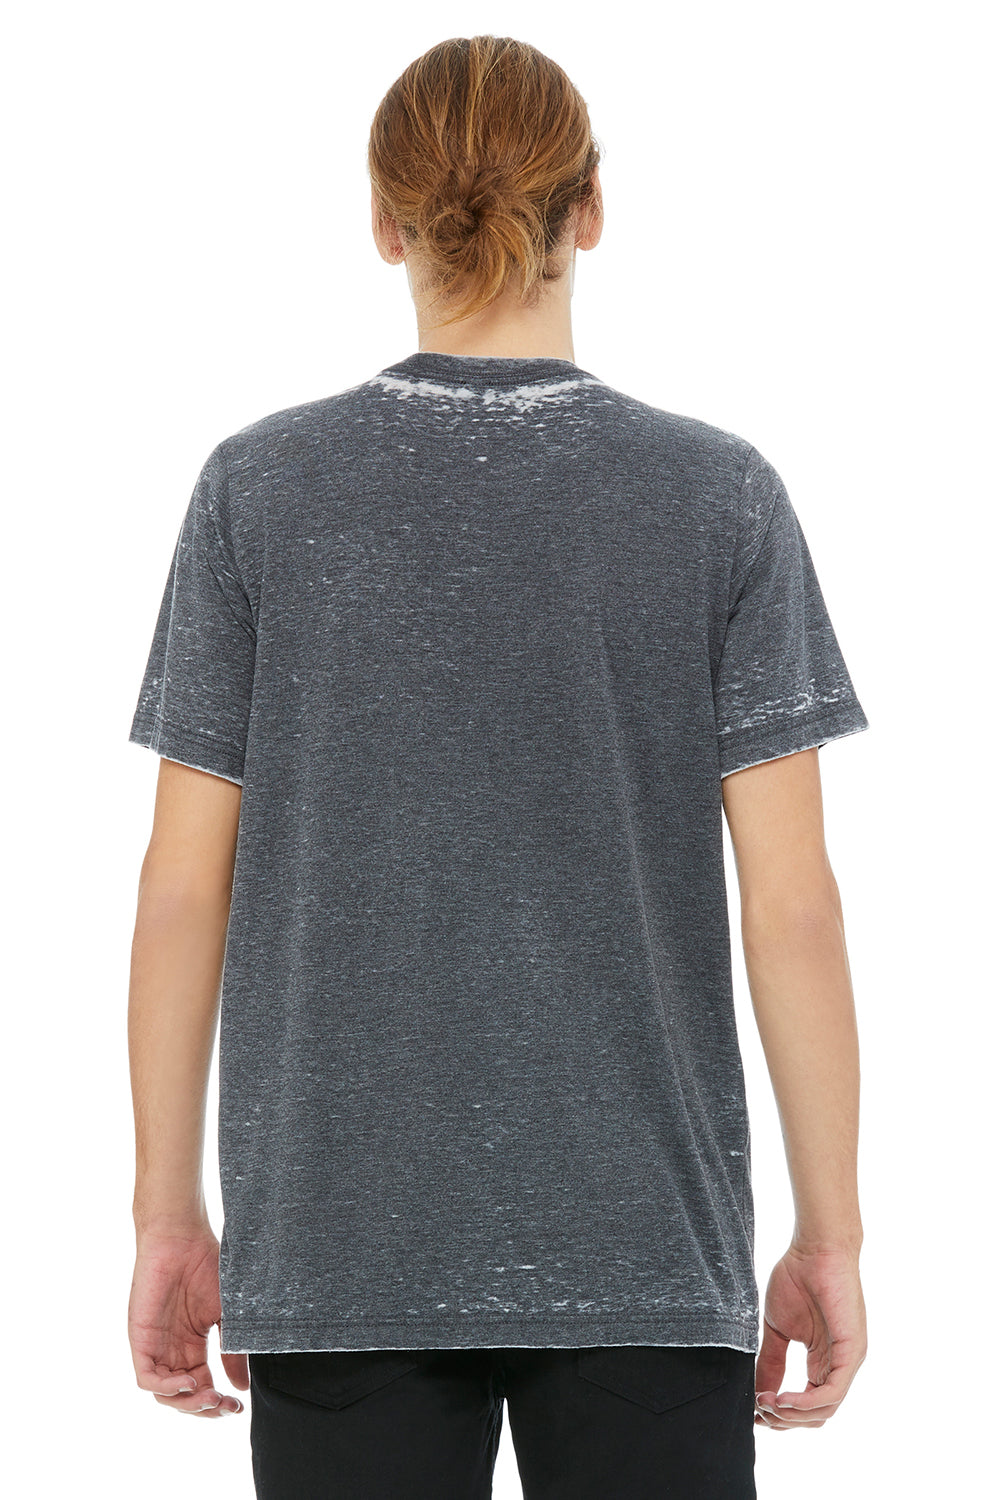 Bella + Canvas BC3650/3650 Mens Short Sleeve Crewneck T-Shirt Grey Acid Washed Model Back